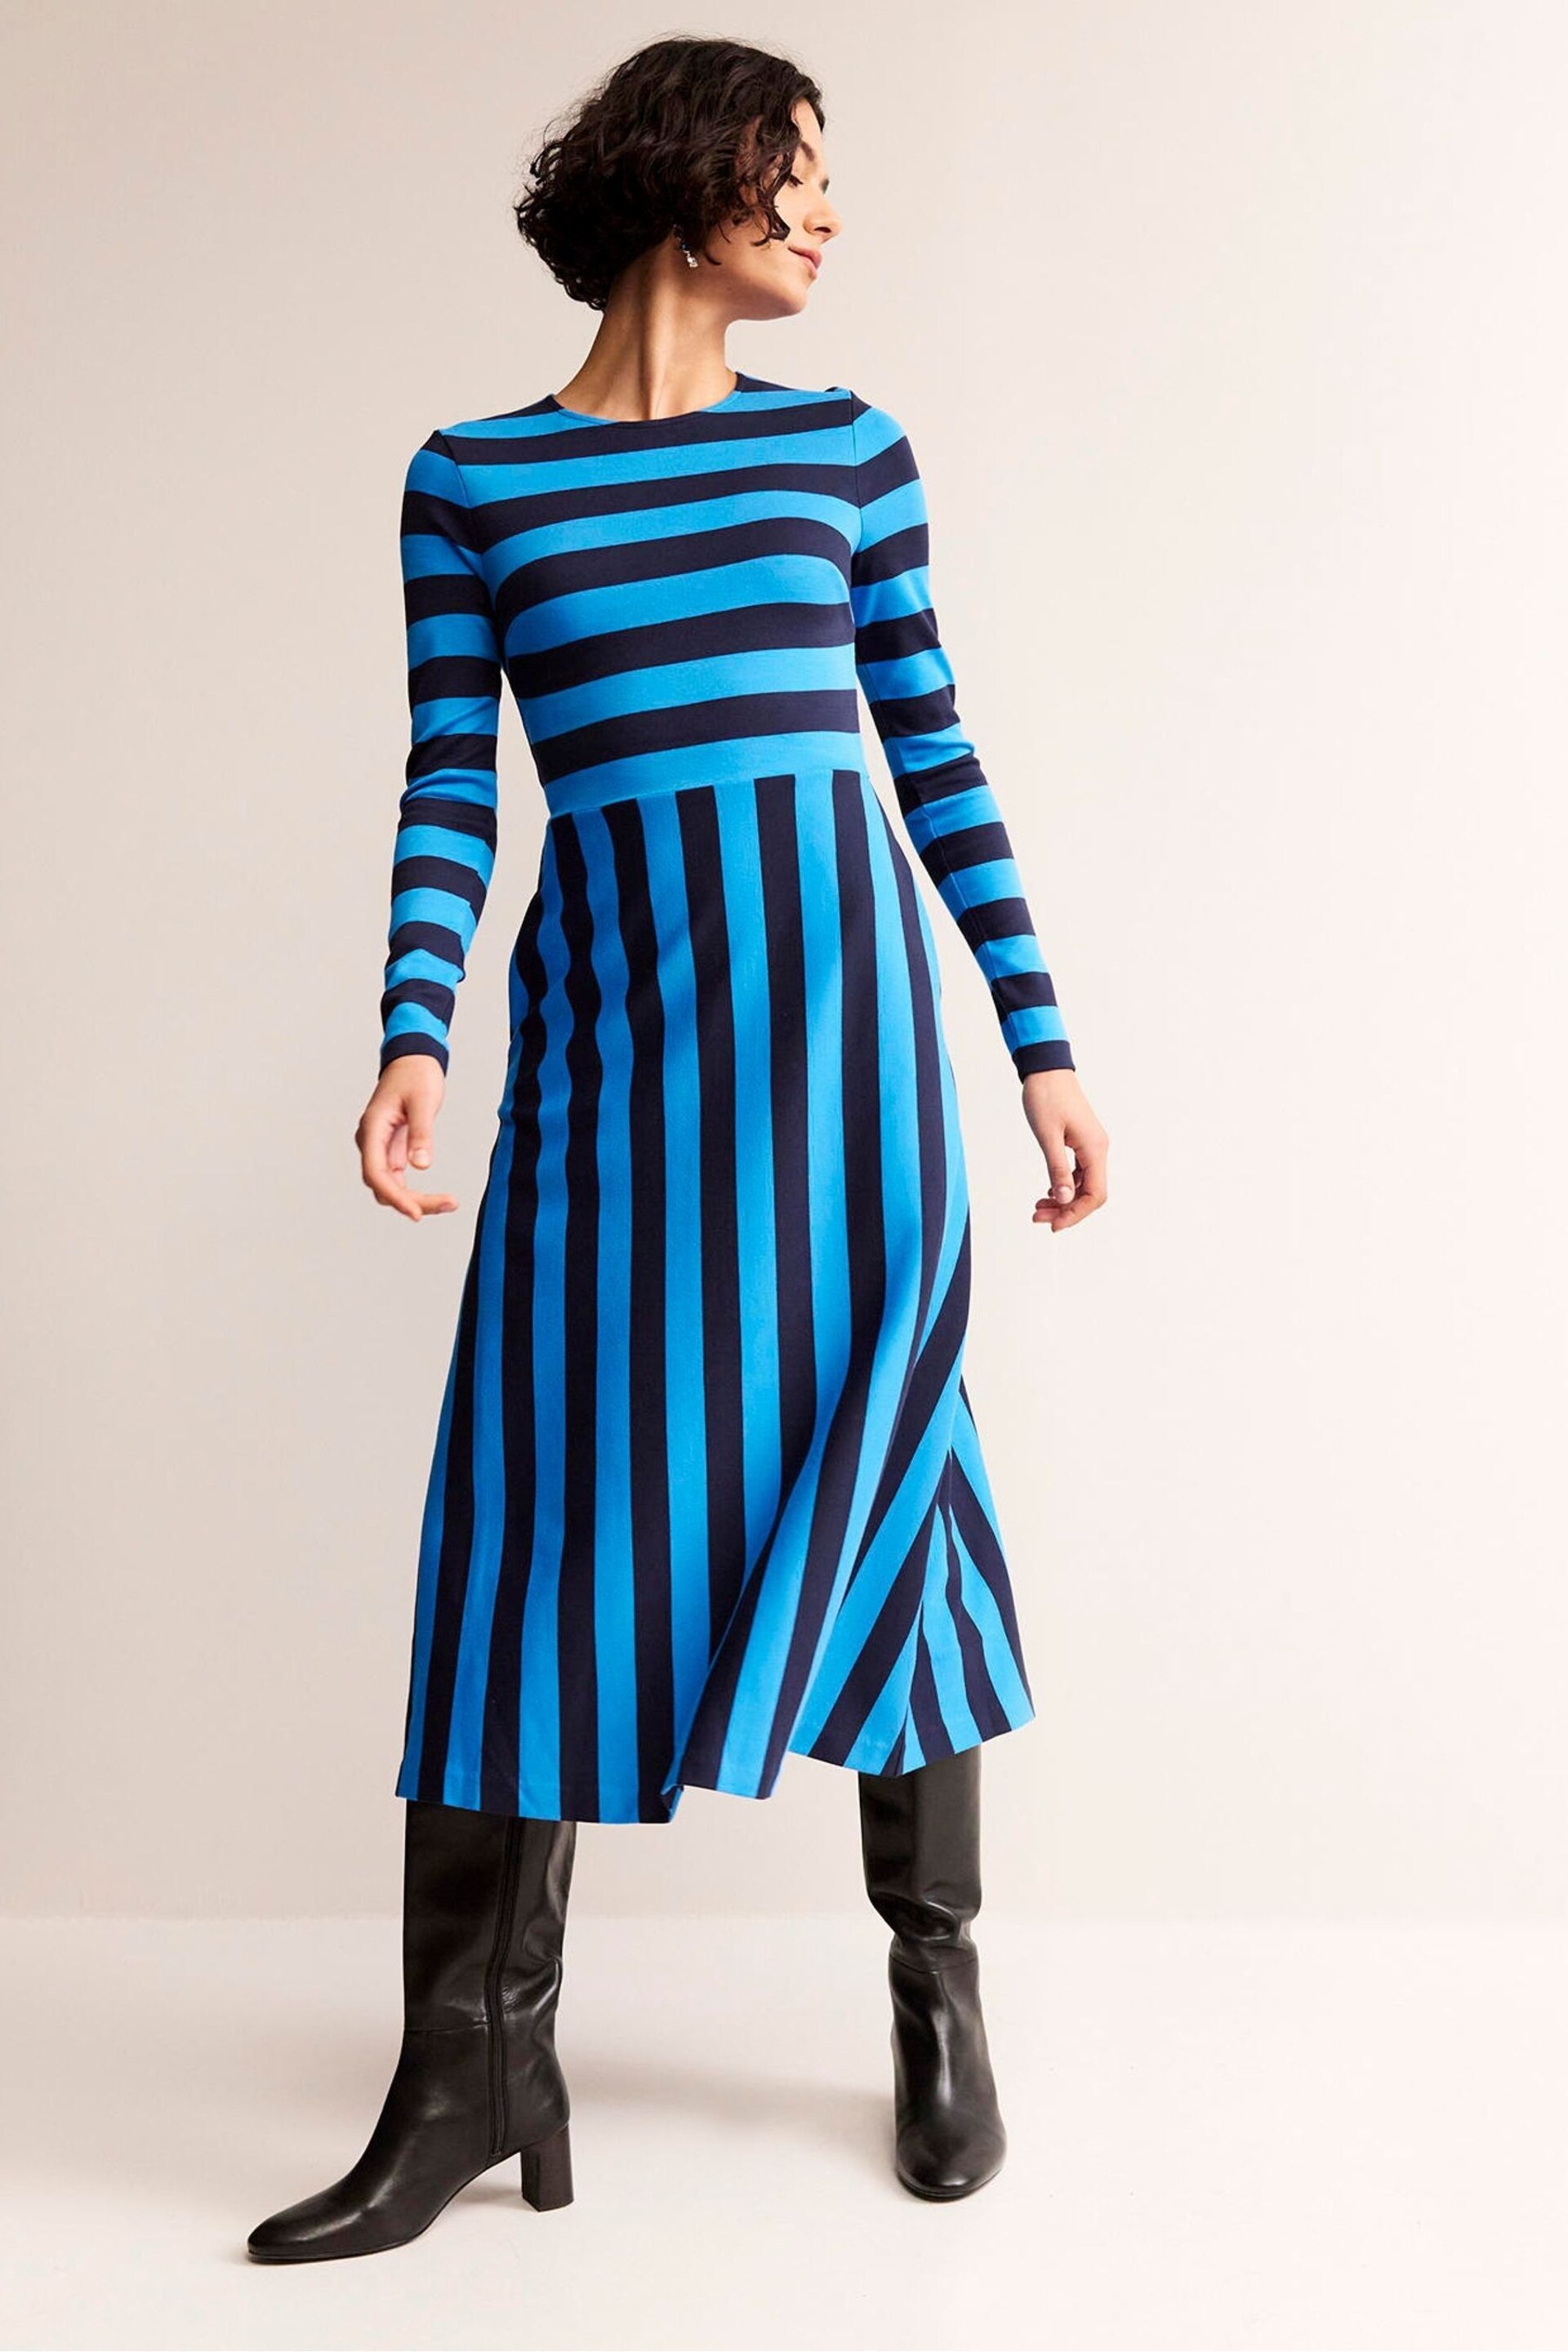 Boden Blue Stripe Jersey Midi Dress - Image 1 of 5